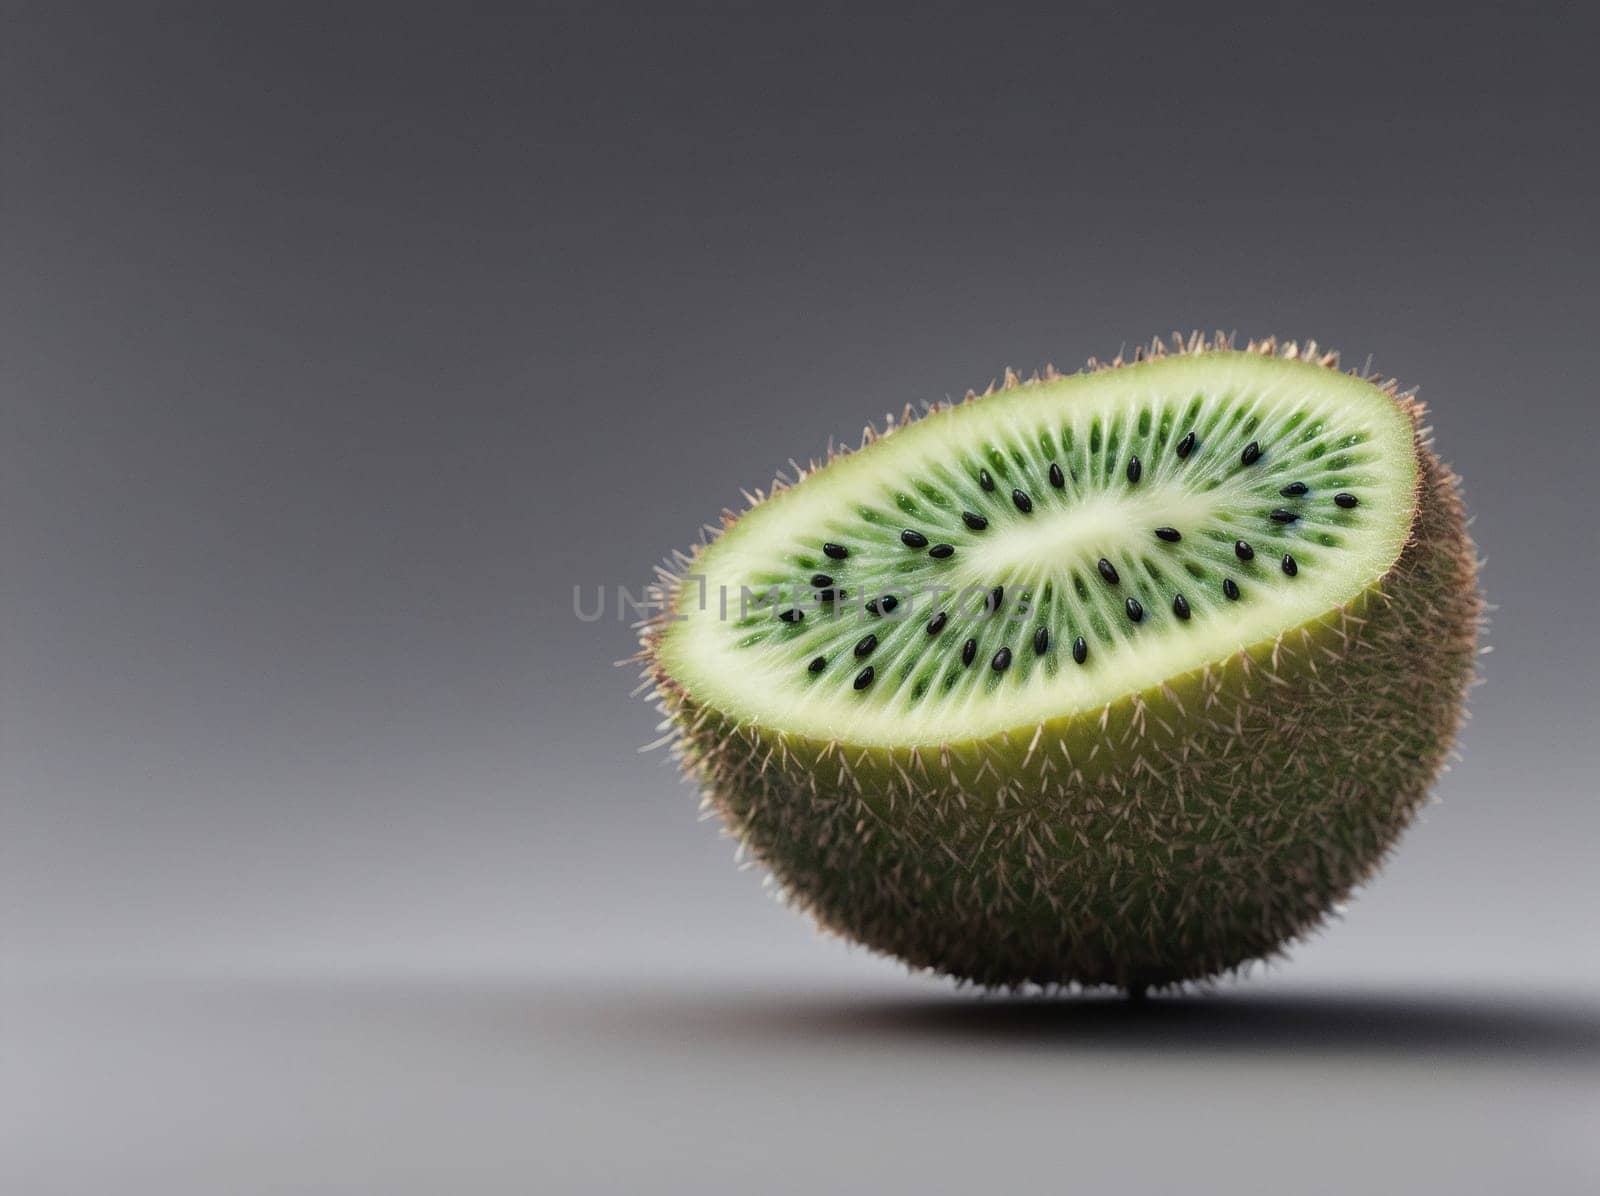 Kiwi Fruit by creart